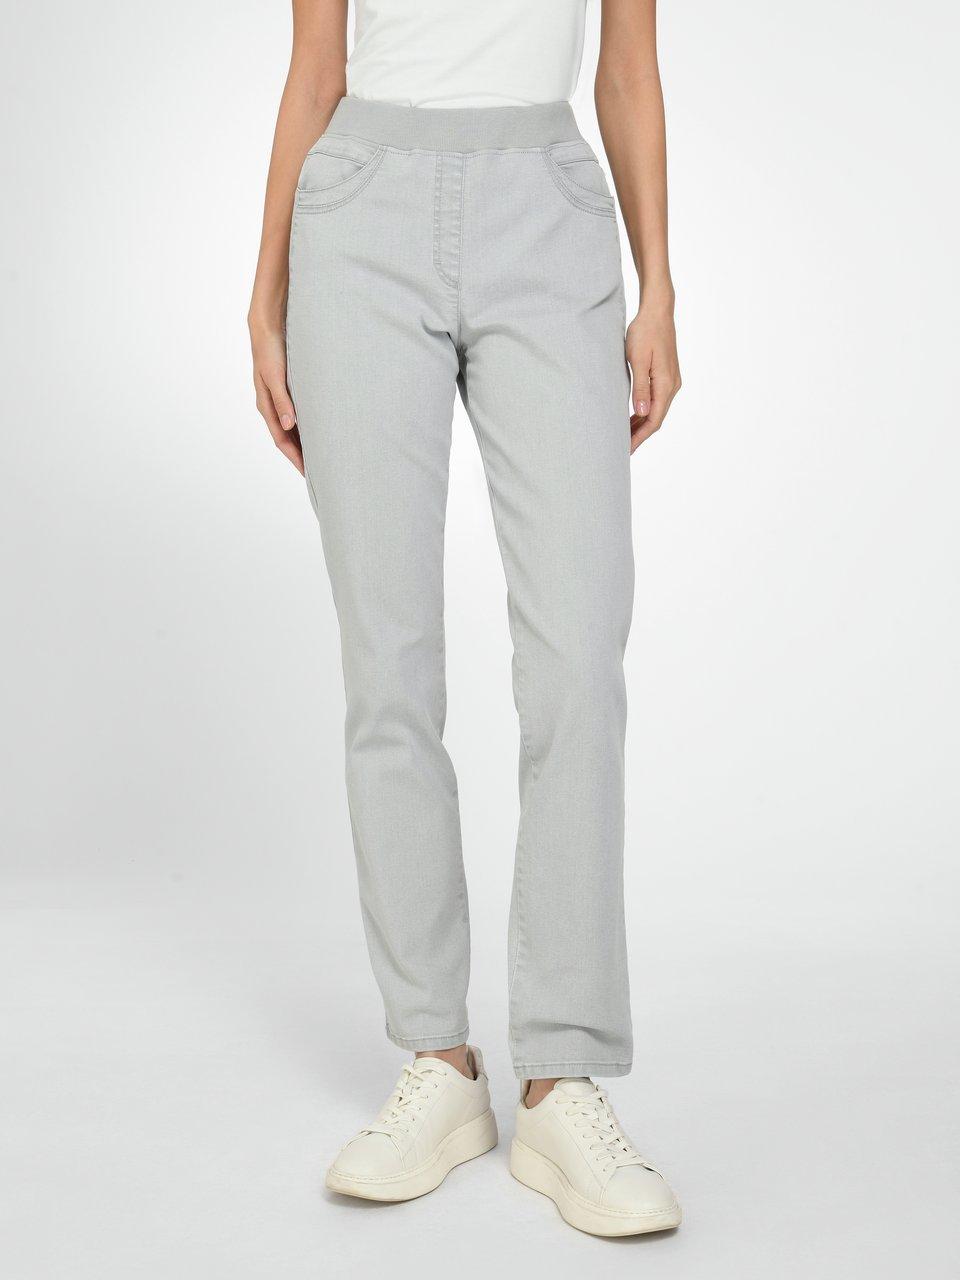 Raphaela by Fun Plus-Jeans denim Modell Comfort Grey Carina - Brax 